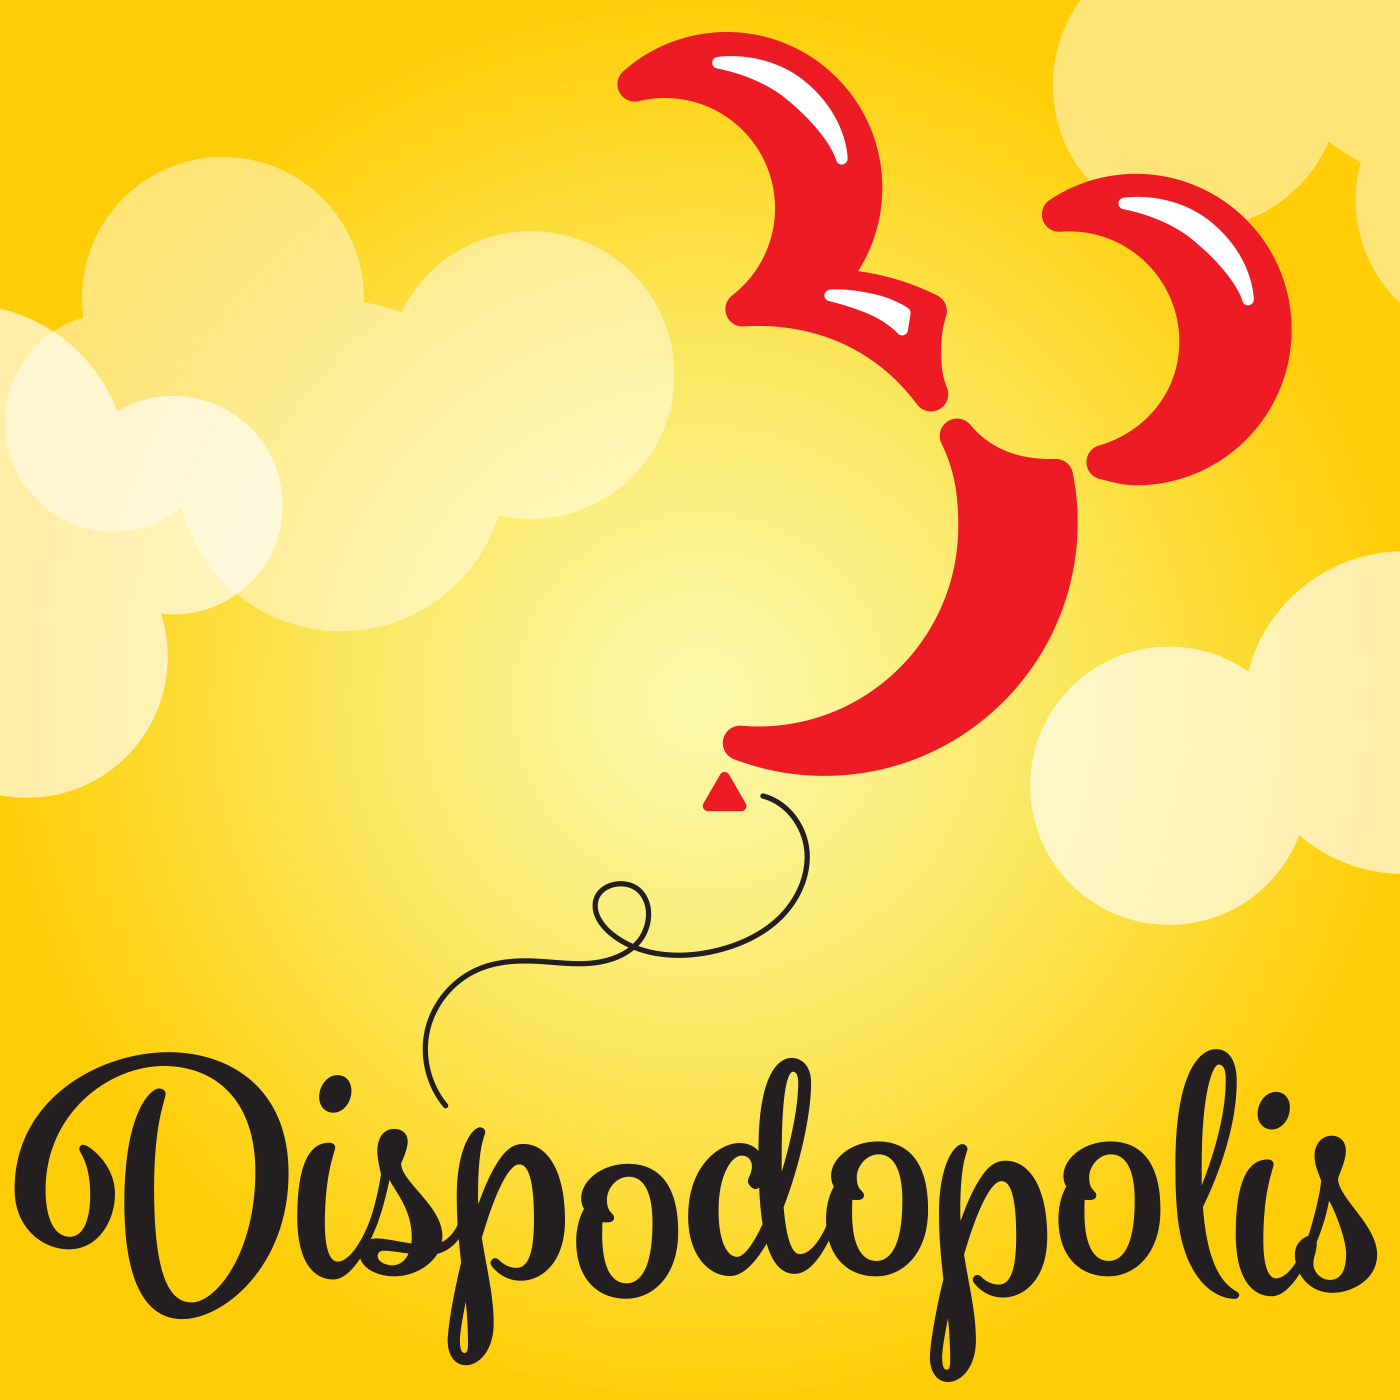 Dispodopolis - Disneyland, Walt Disney World, and everything in between